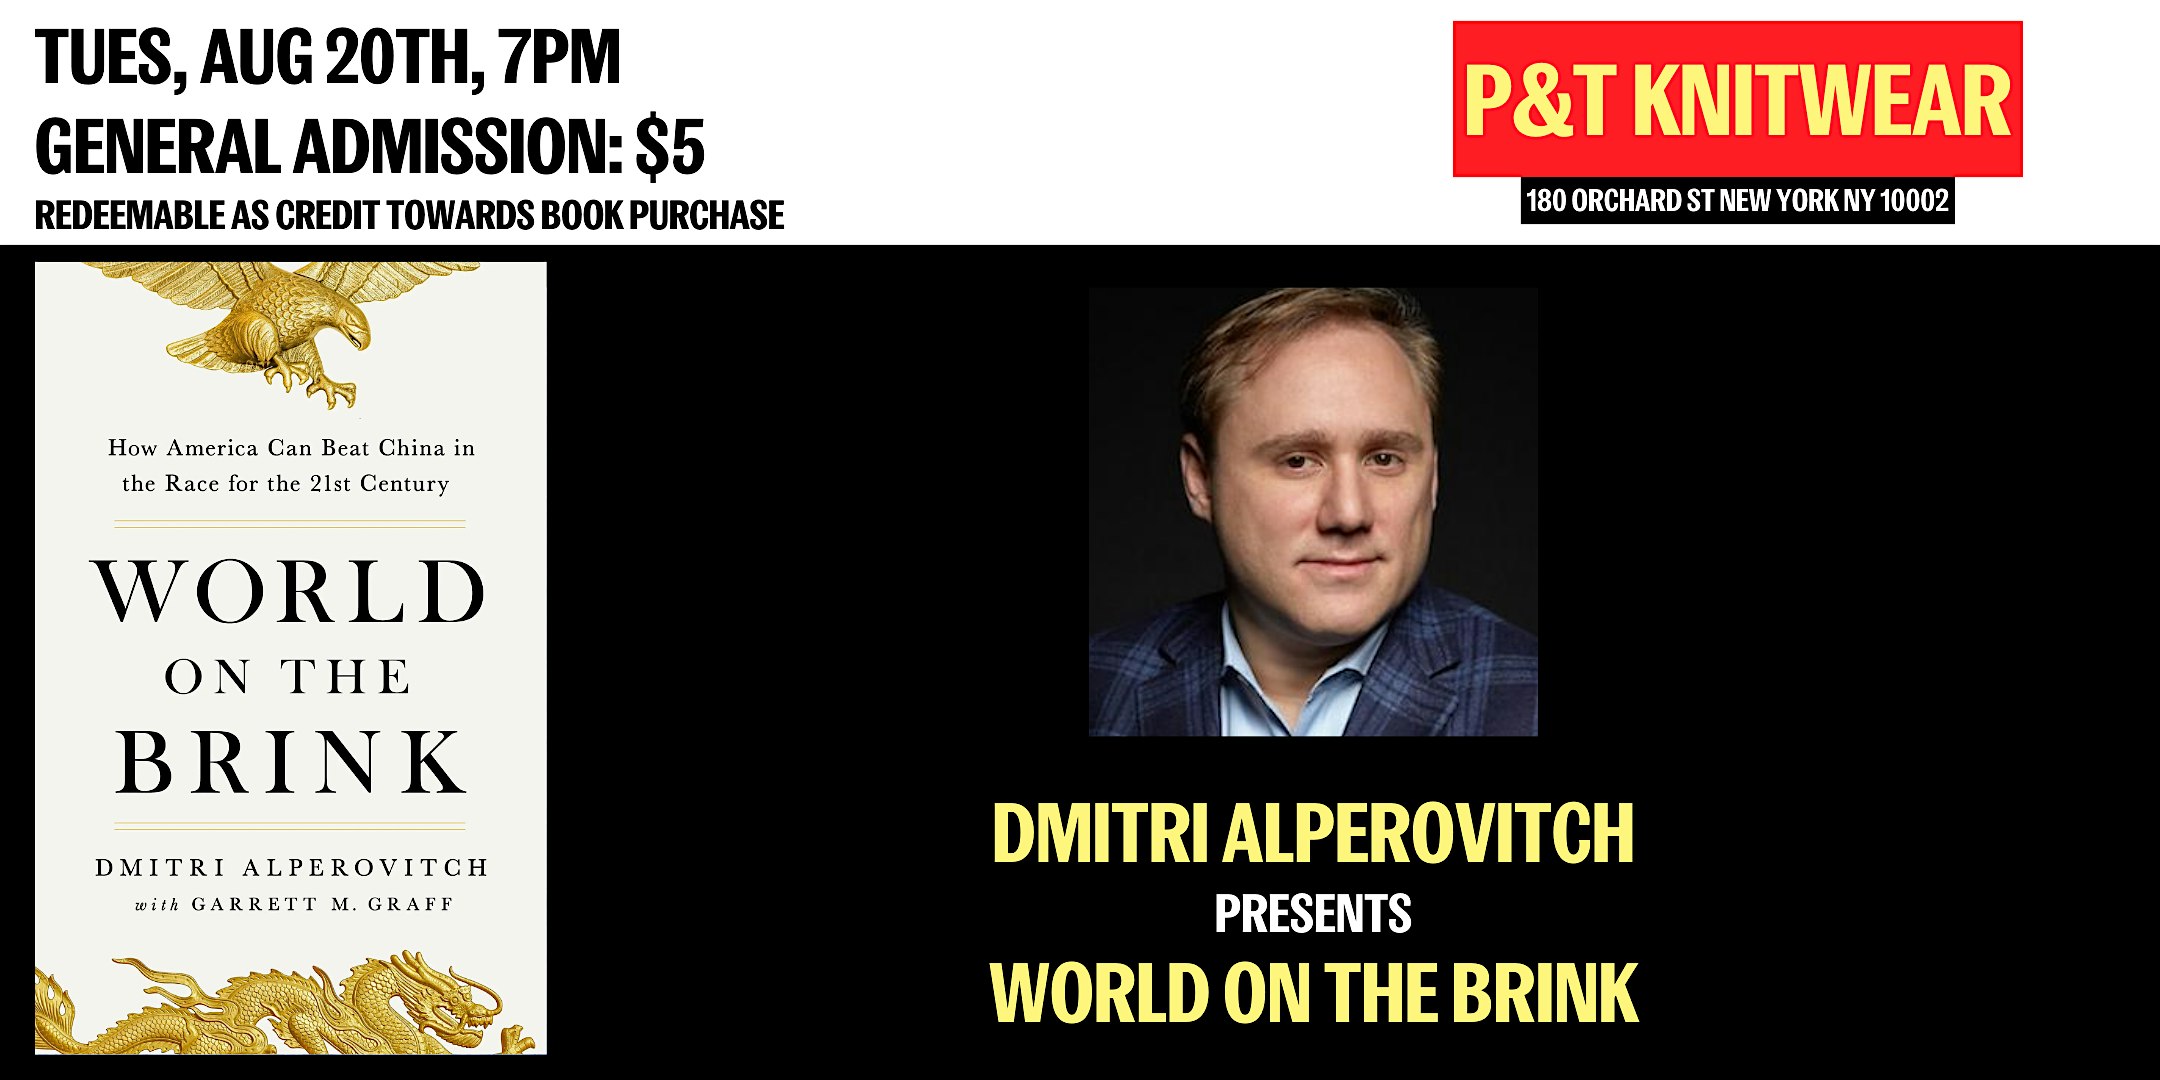 Dmitri Alperovitch presents World on the Brink